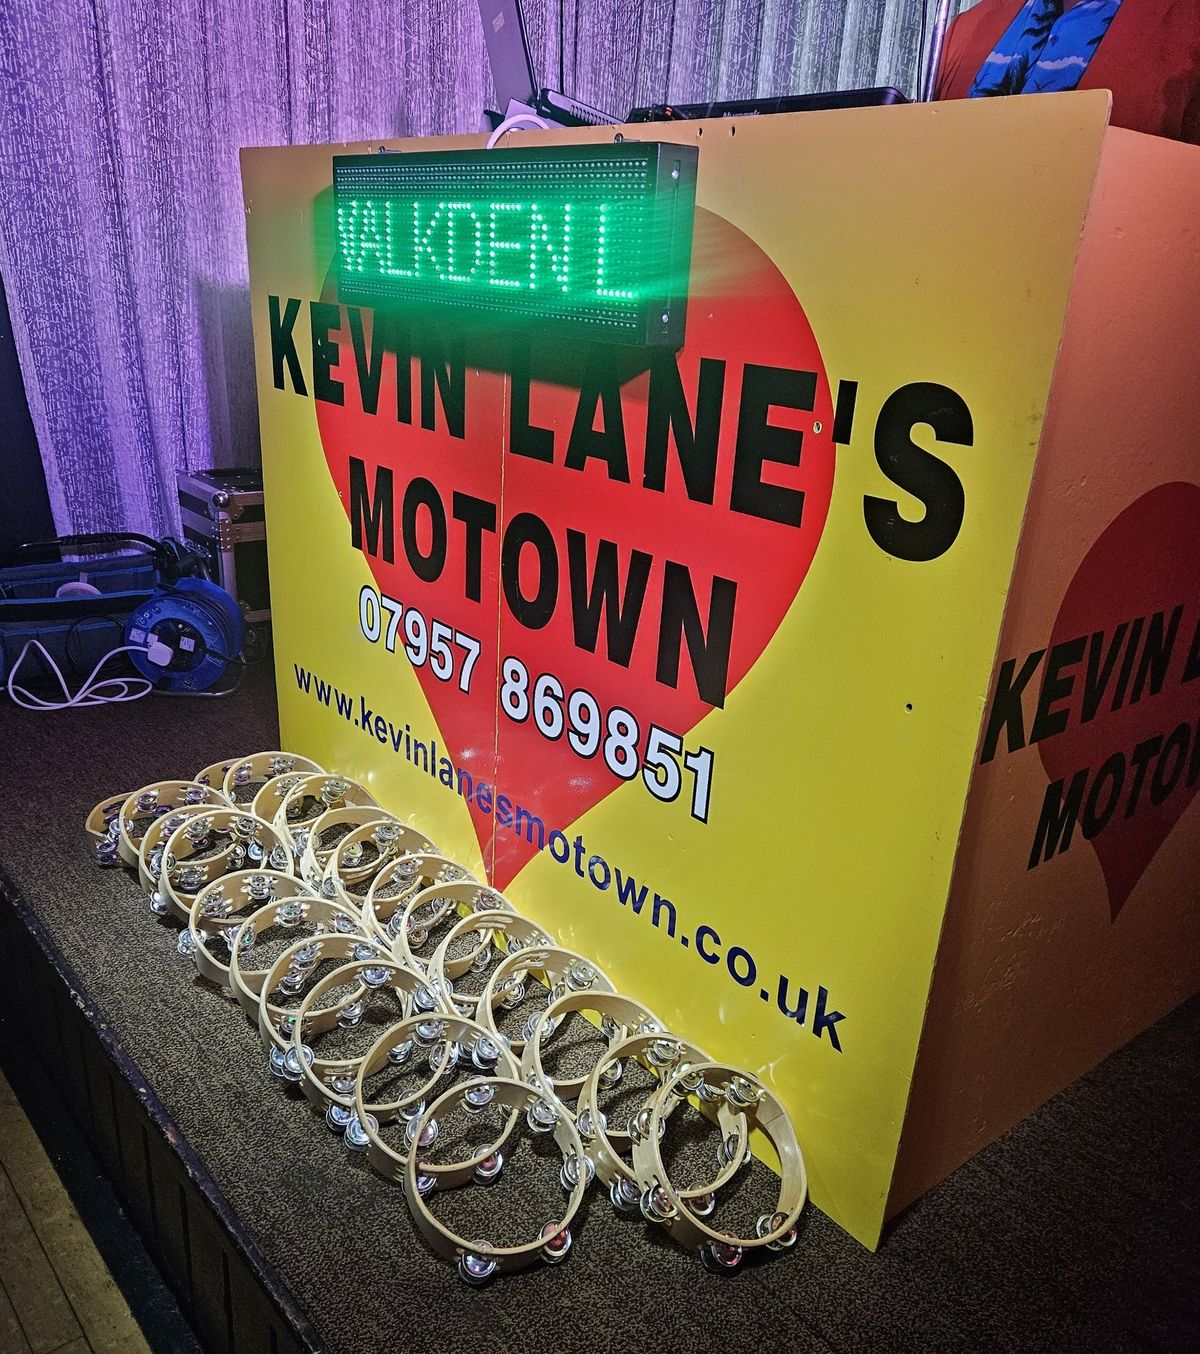 Kevin Lane's Motown 